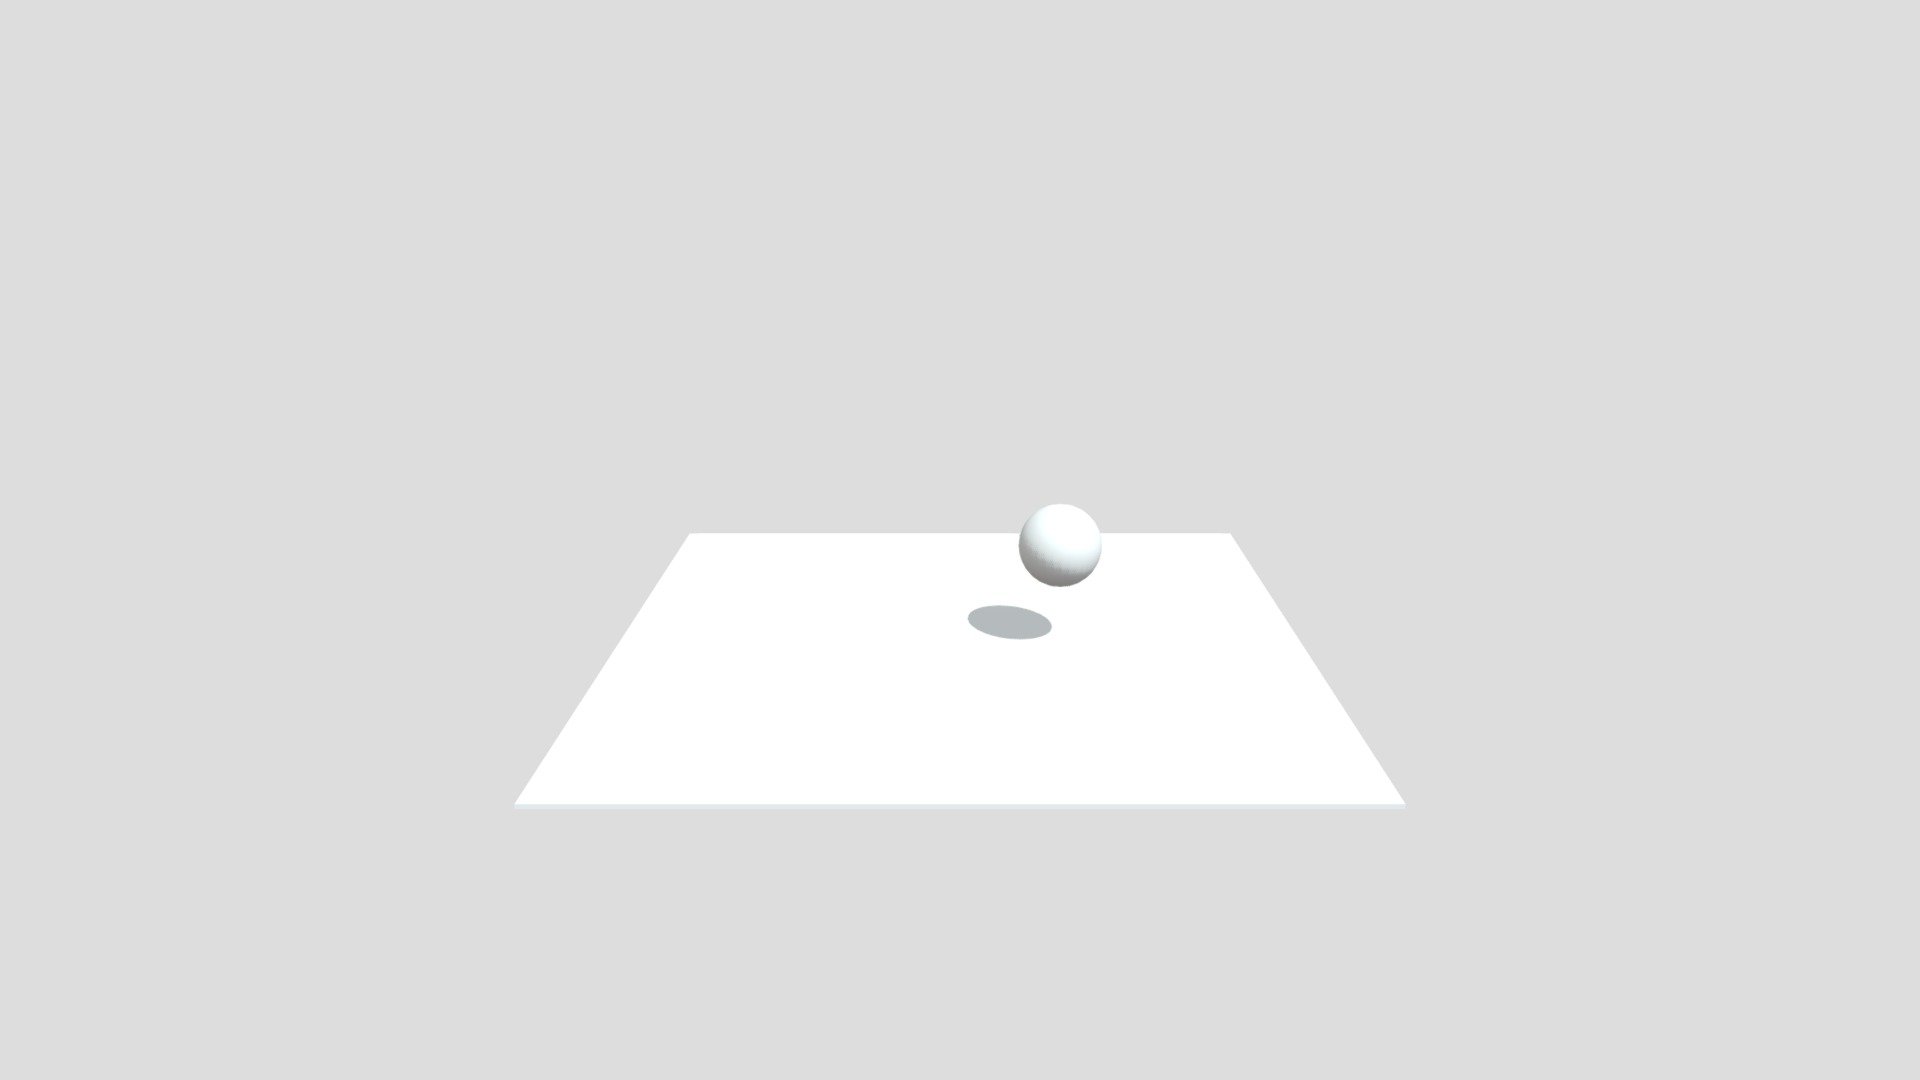 Simple Ball Animation